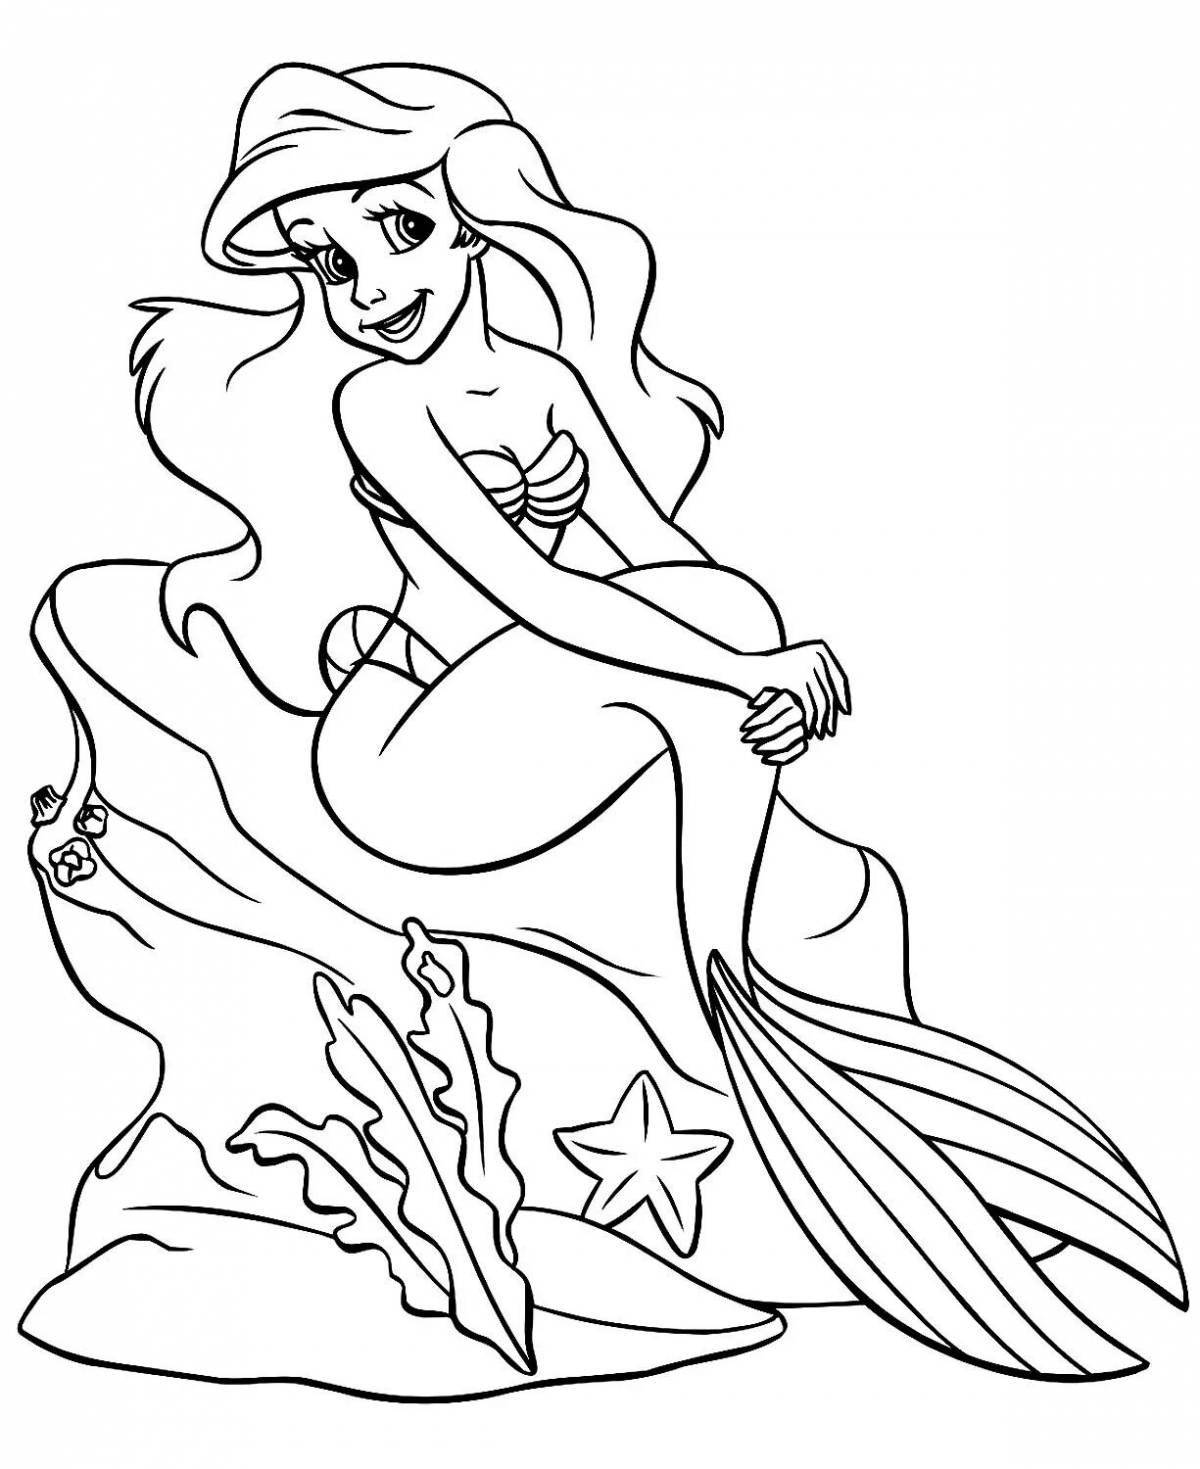 Joyful mermaid coloring book for children 4-5 years old